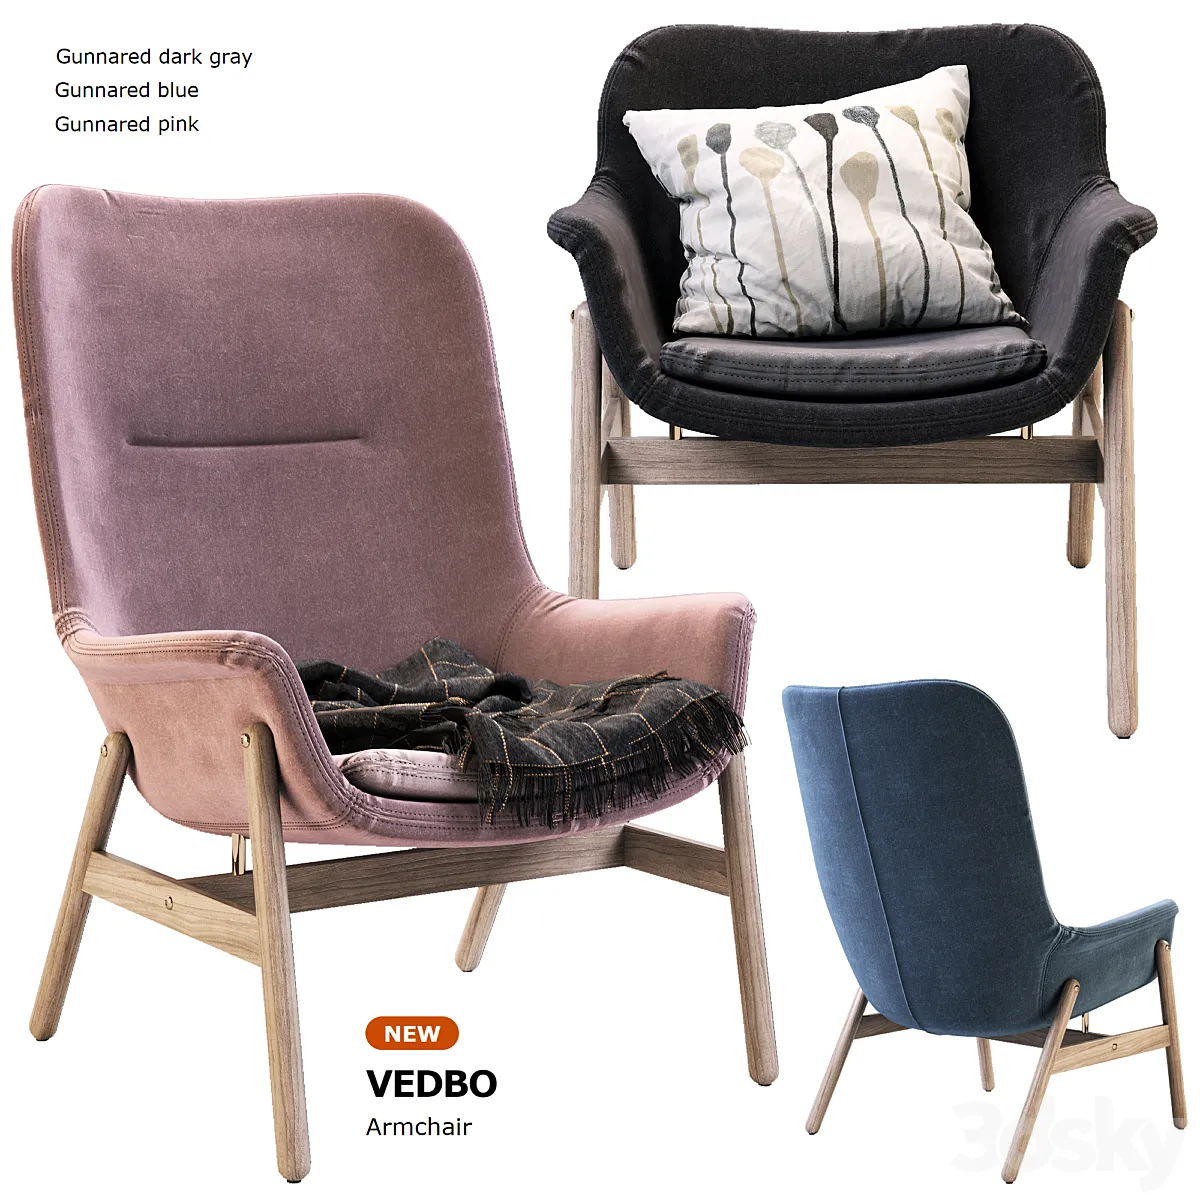 3dsky - VEDBO IKEA - IKEA VEDBOO - Arm chair - 3D model